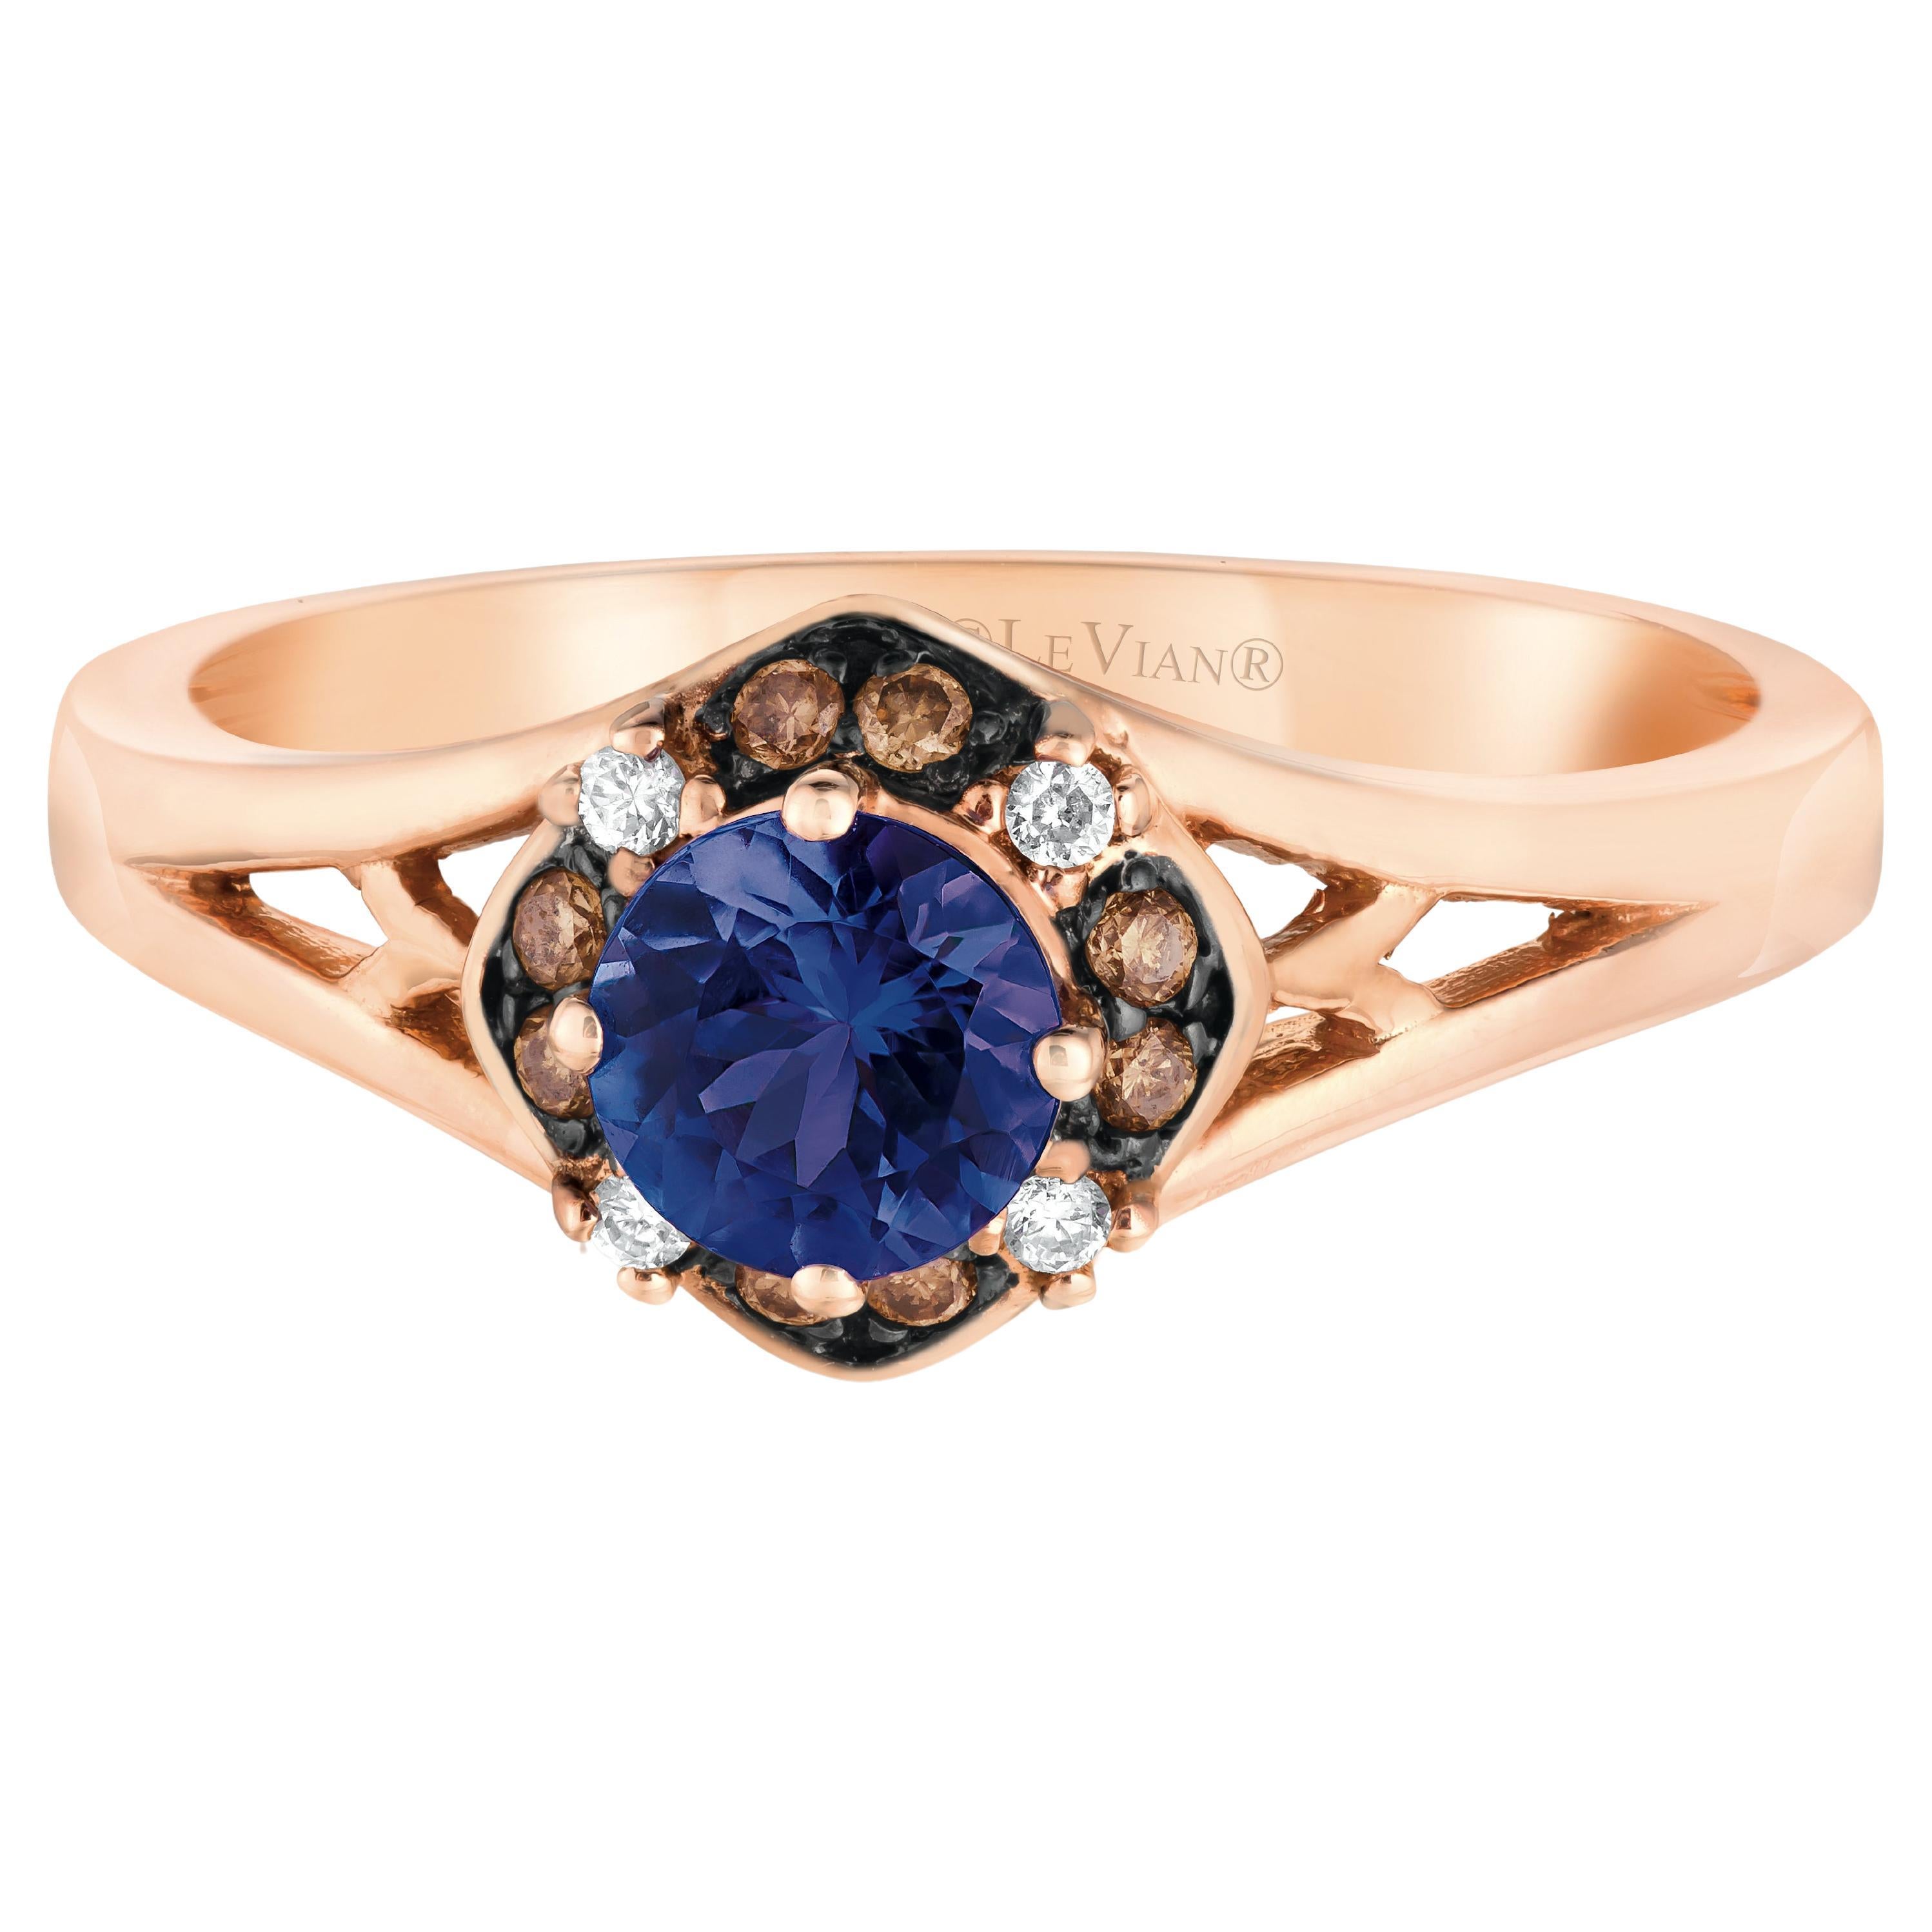 Levian Blue Tanzanite And Diamond Ring in 14K Rose Gold